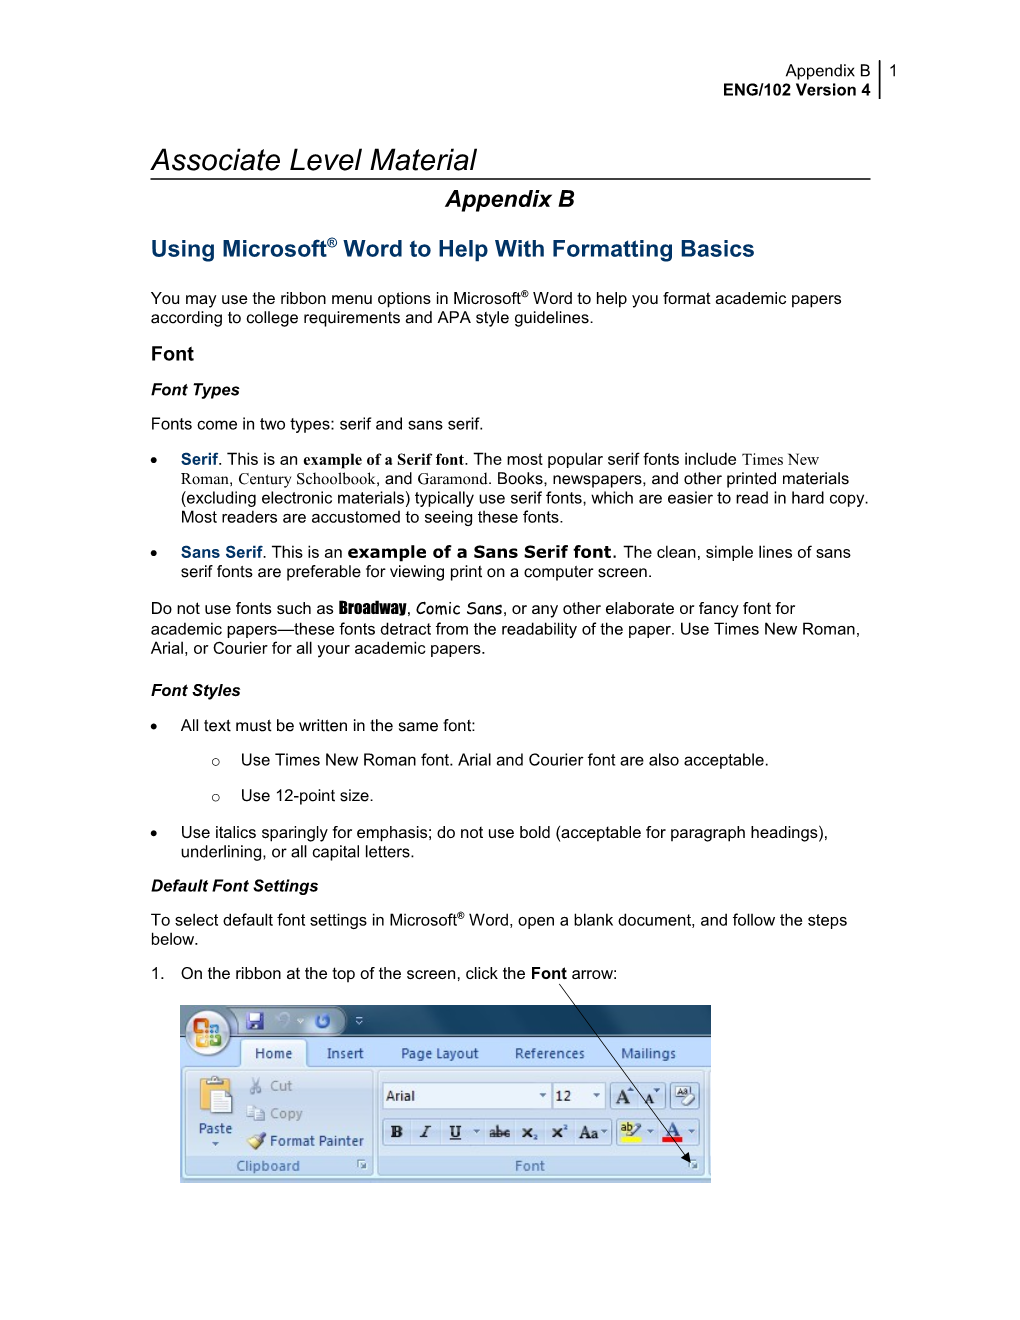 Using Microsoft Word to Help with Formatting Basics